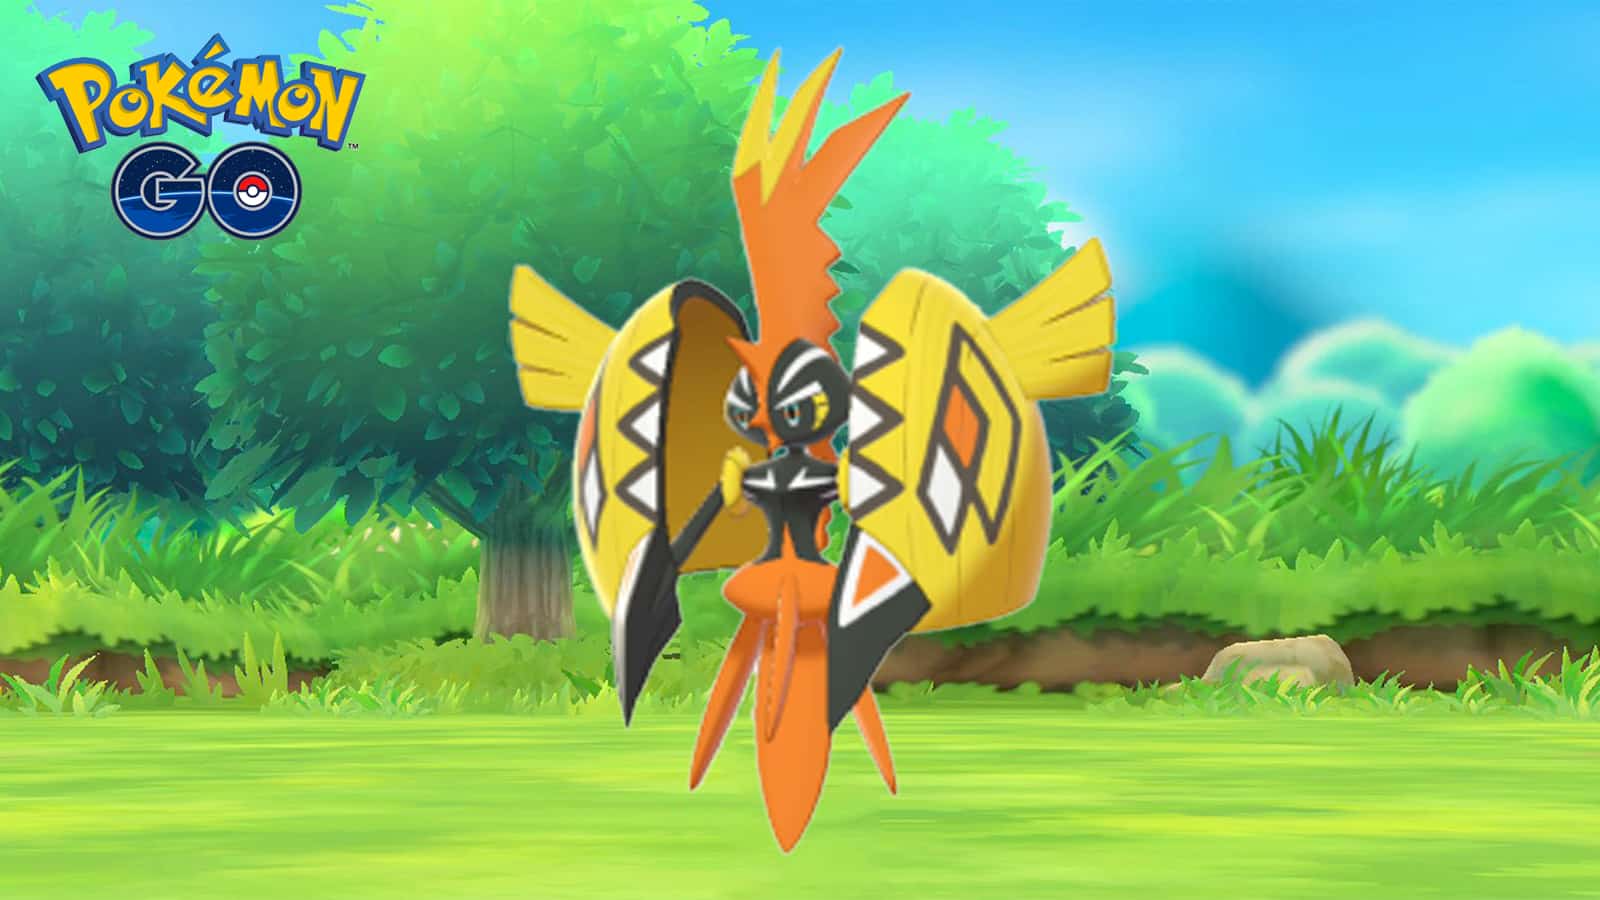 Tapu Koko Pokémon GO Raid Battle Tips